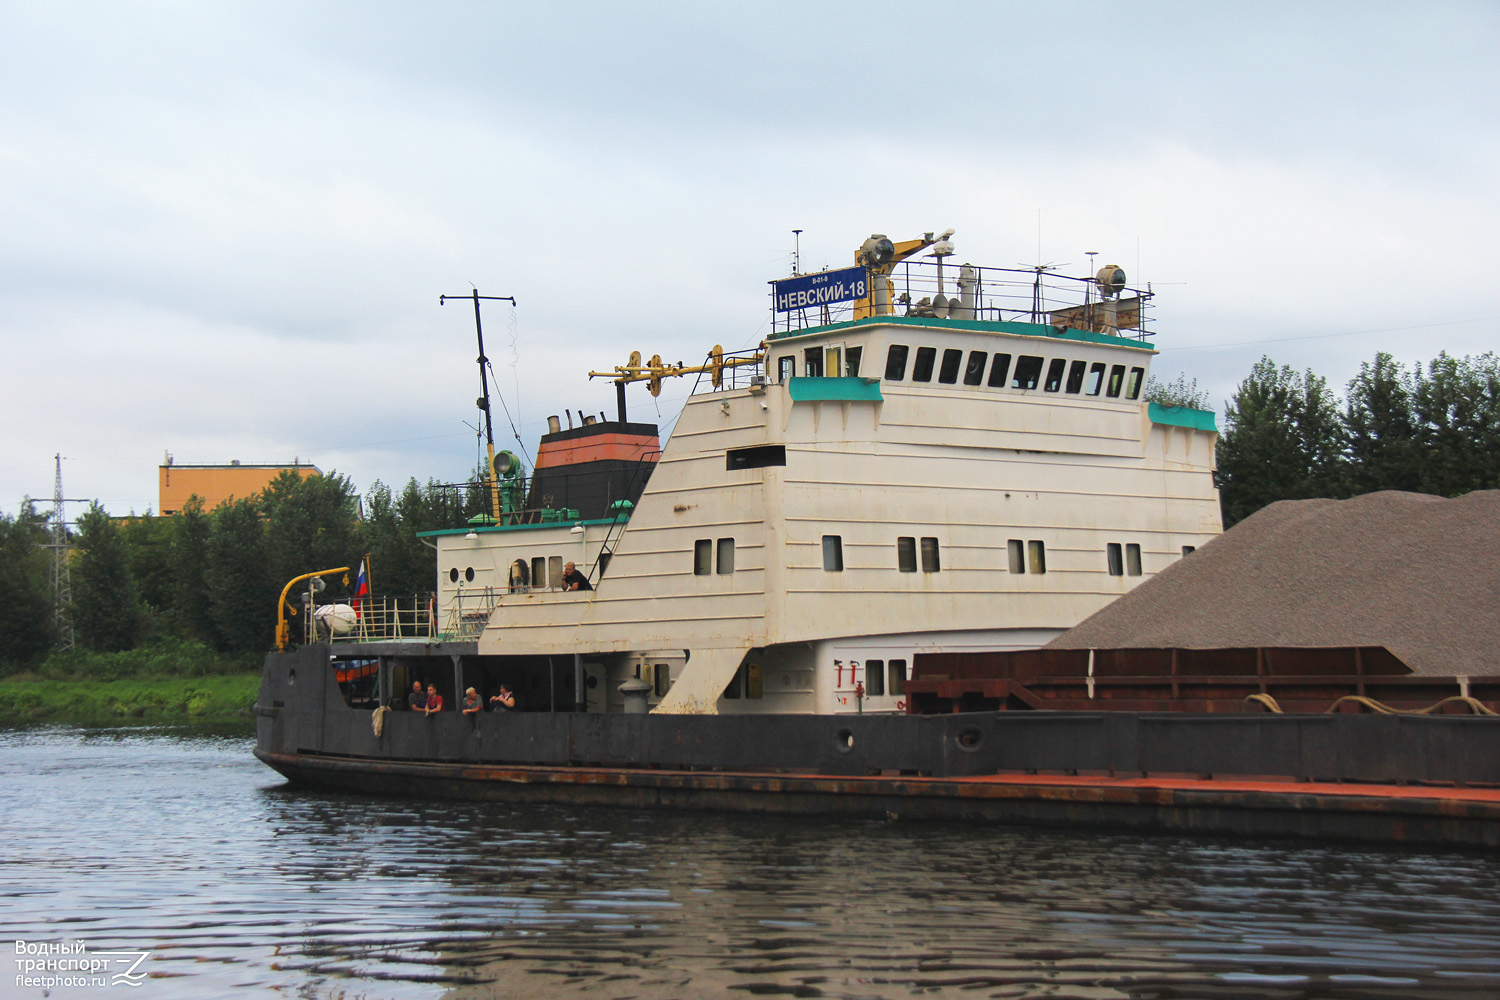 Невский-18. Vessel superstructures